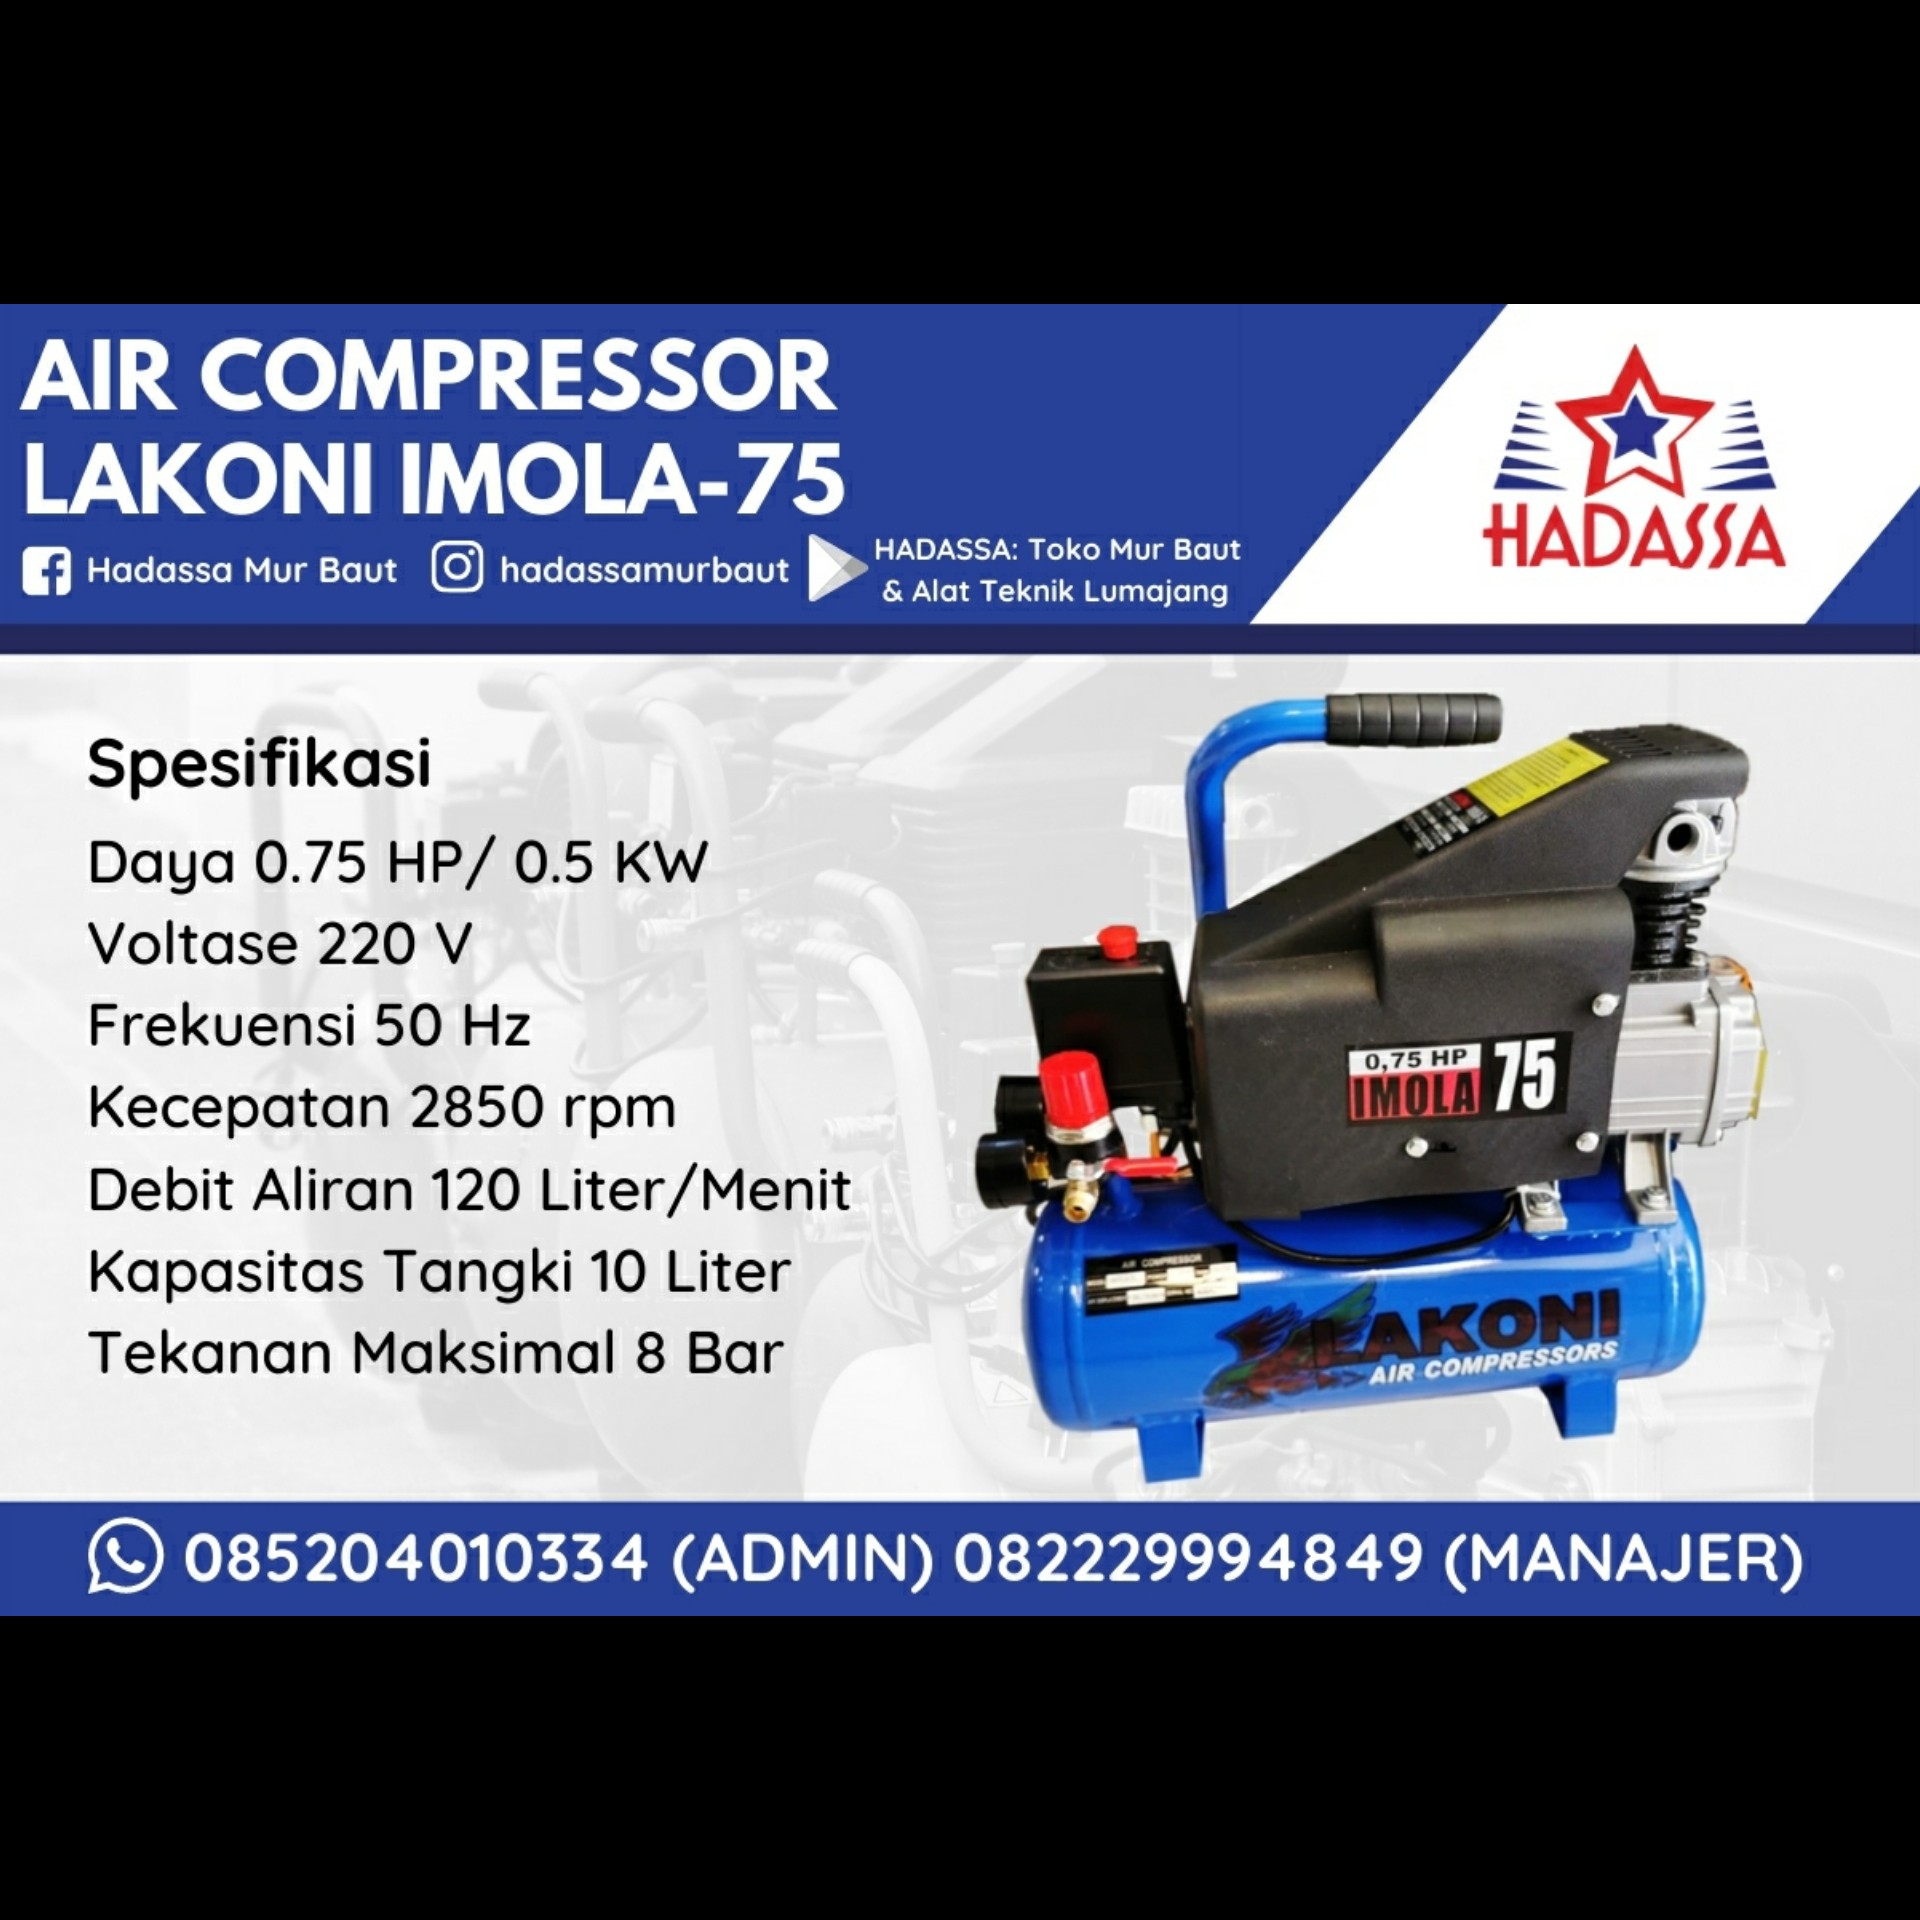 Air Compressor Lakoni Imola-75